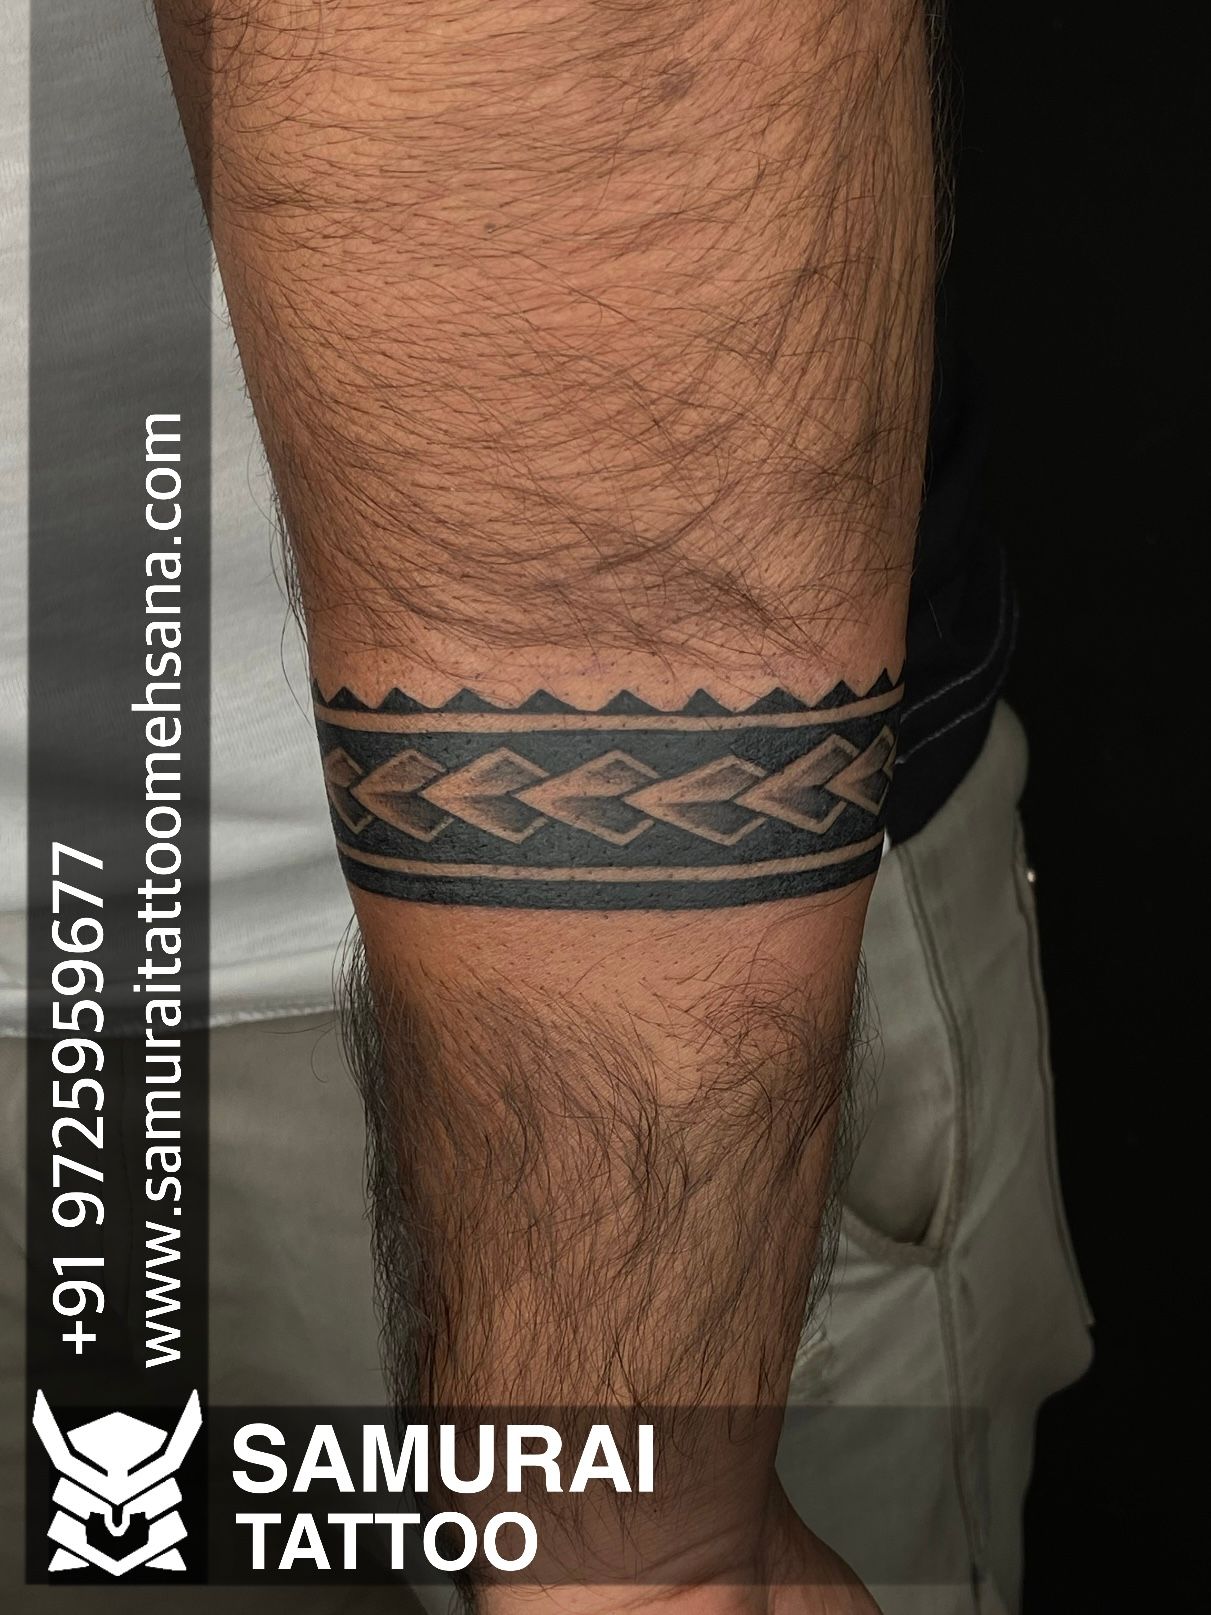 Armband tattoo men. | Band tattoo designs, Armband tattoo design, Forearm  band tattoos